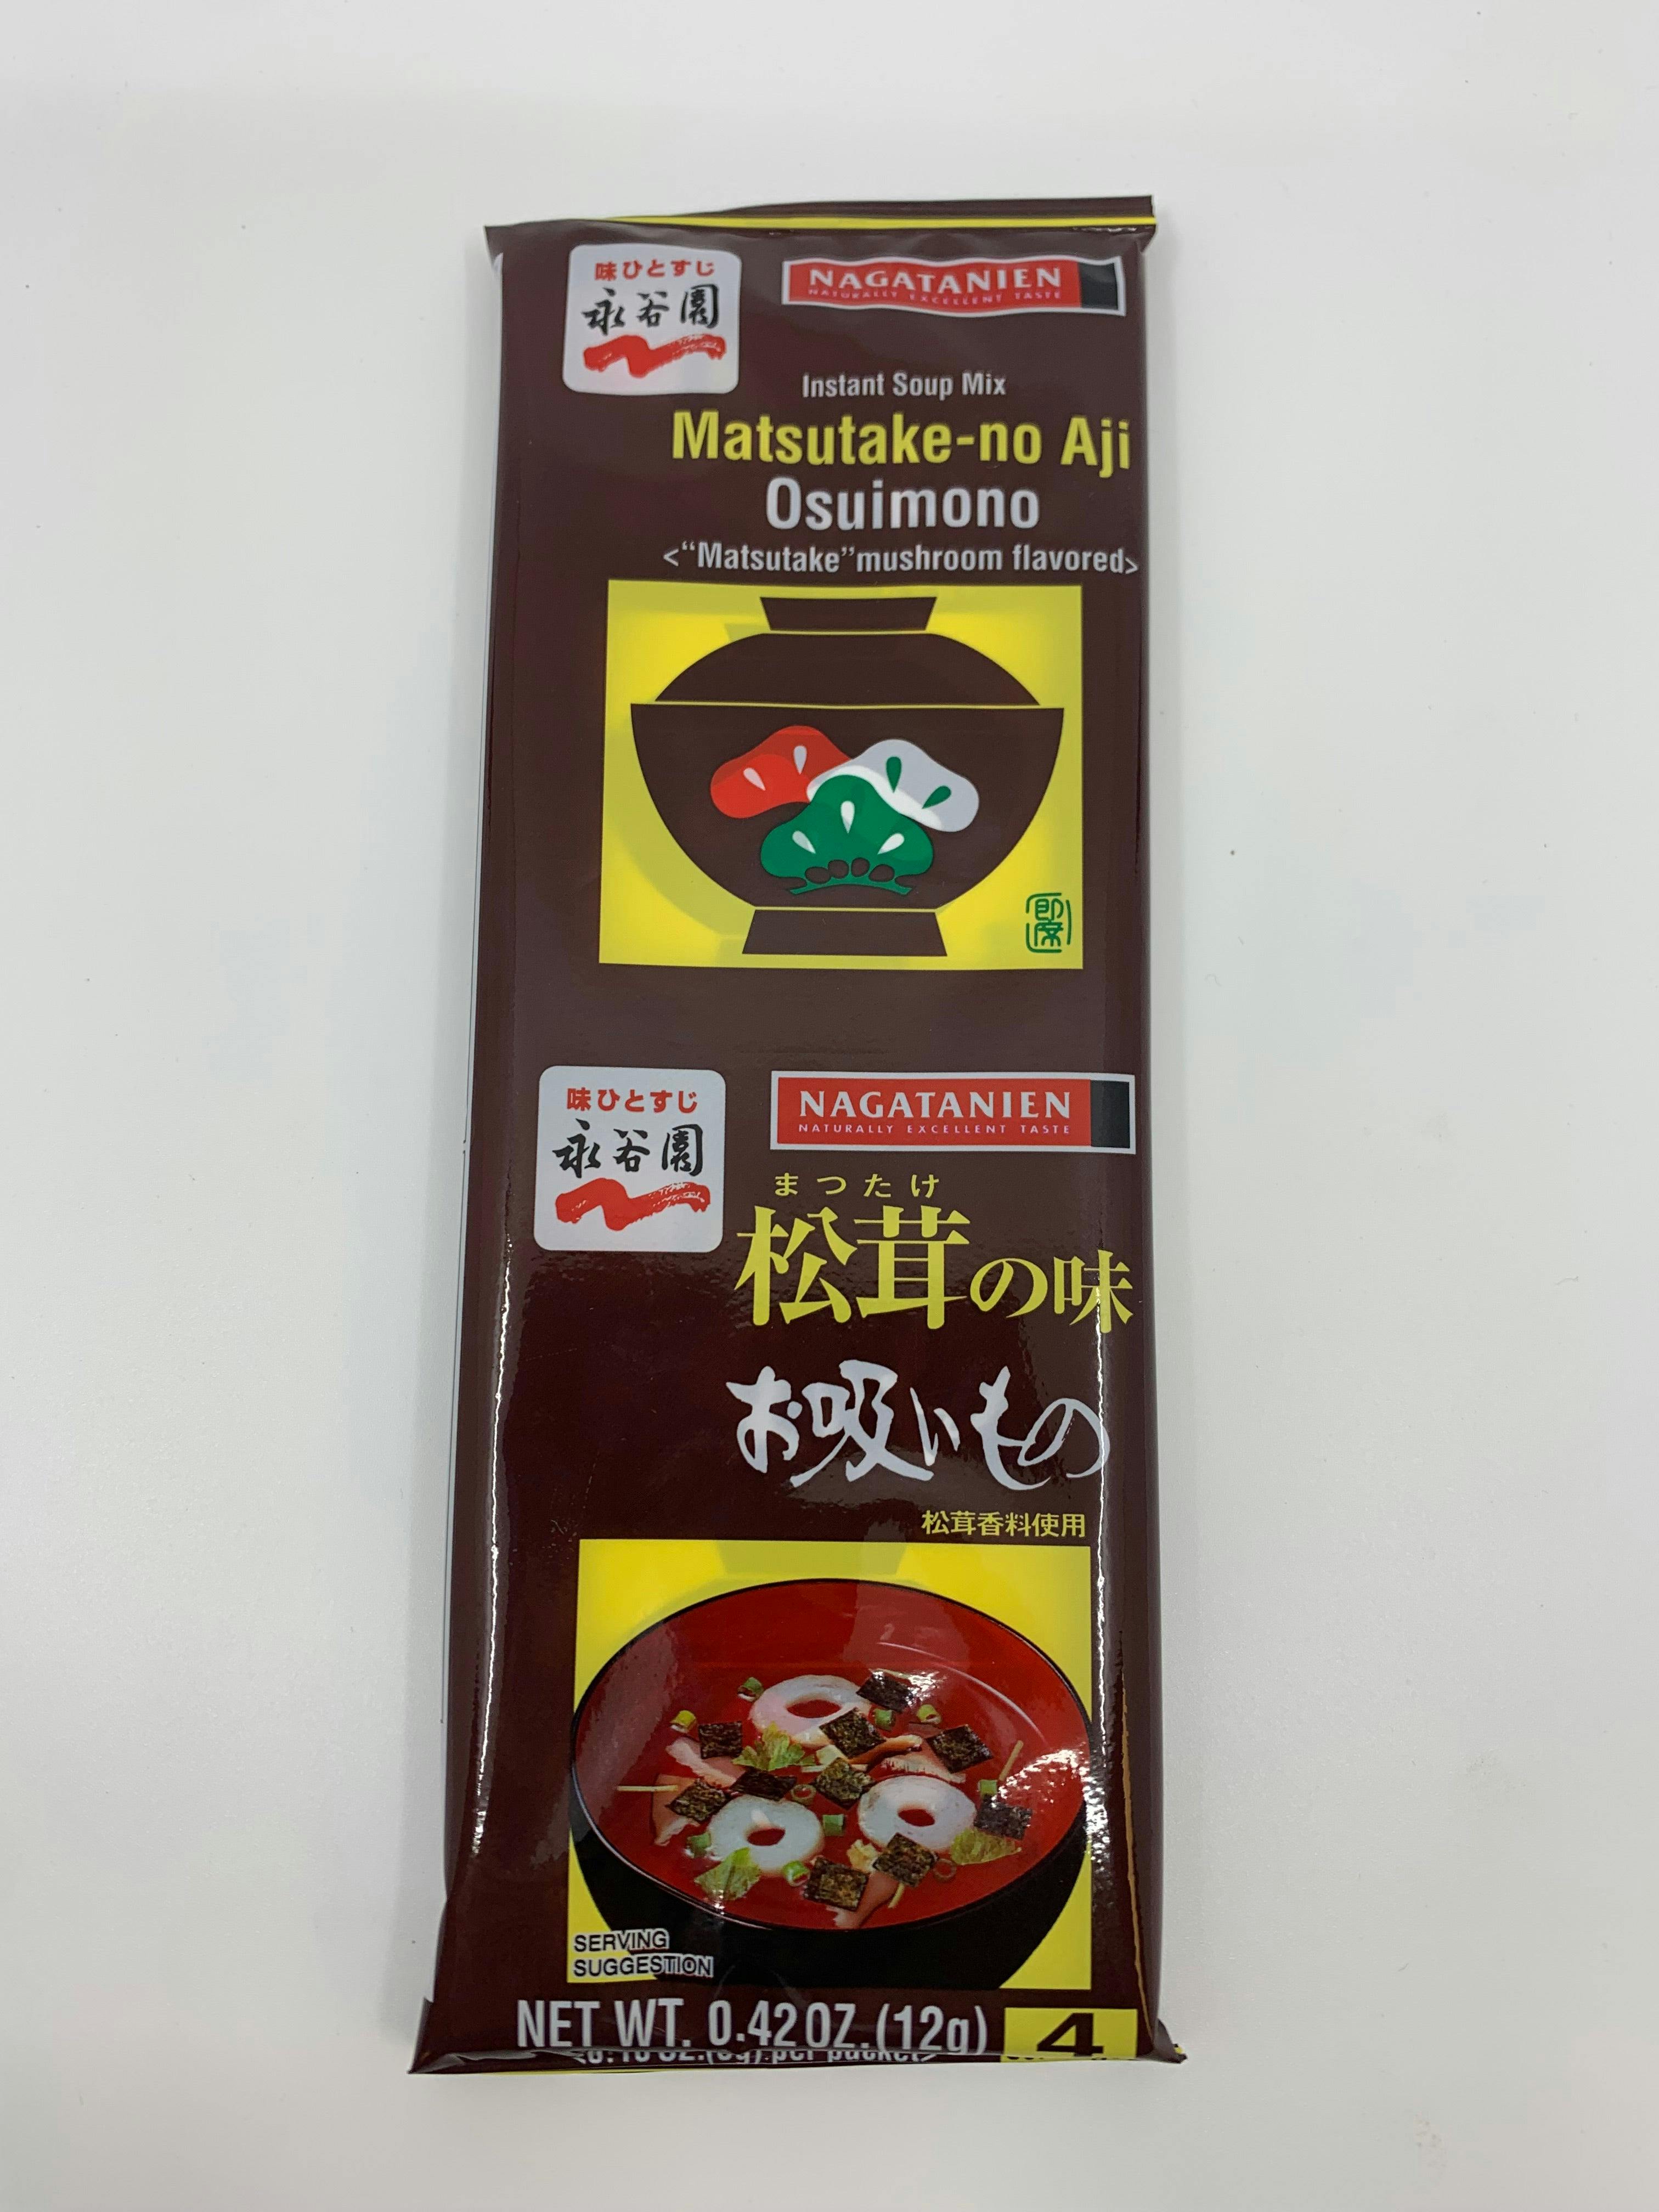 永谷园 Nagatanien 即食汤料包 Instant Soup Mix 松茸味 Mushroom Flavor 12g